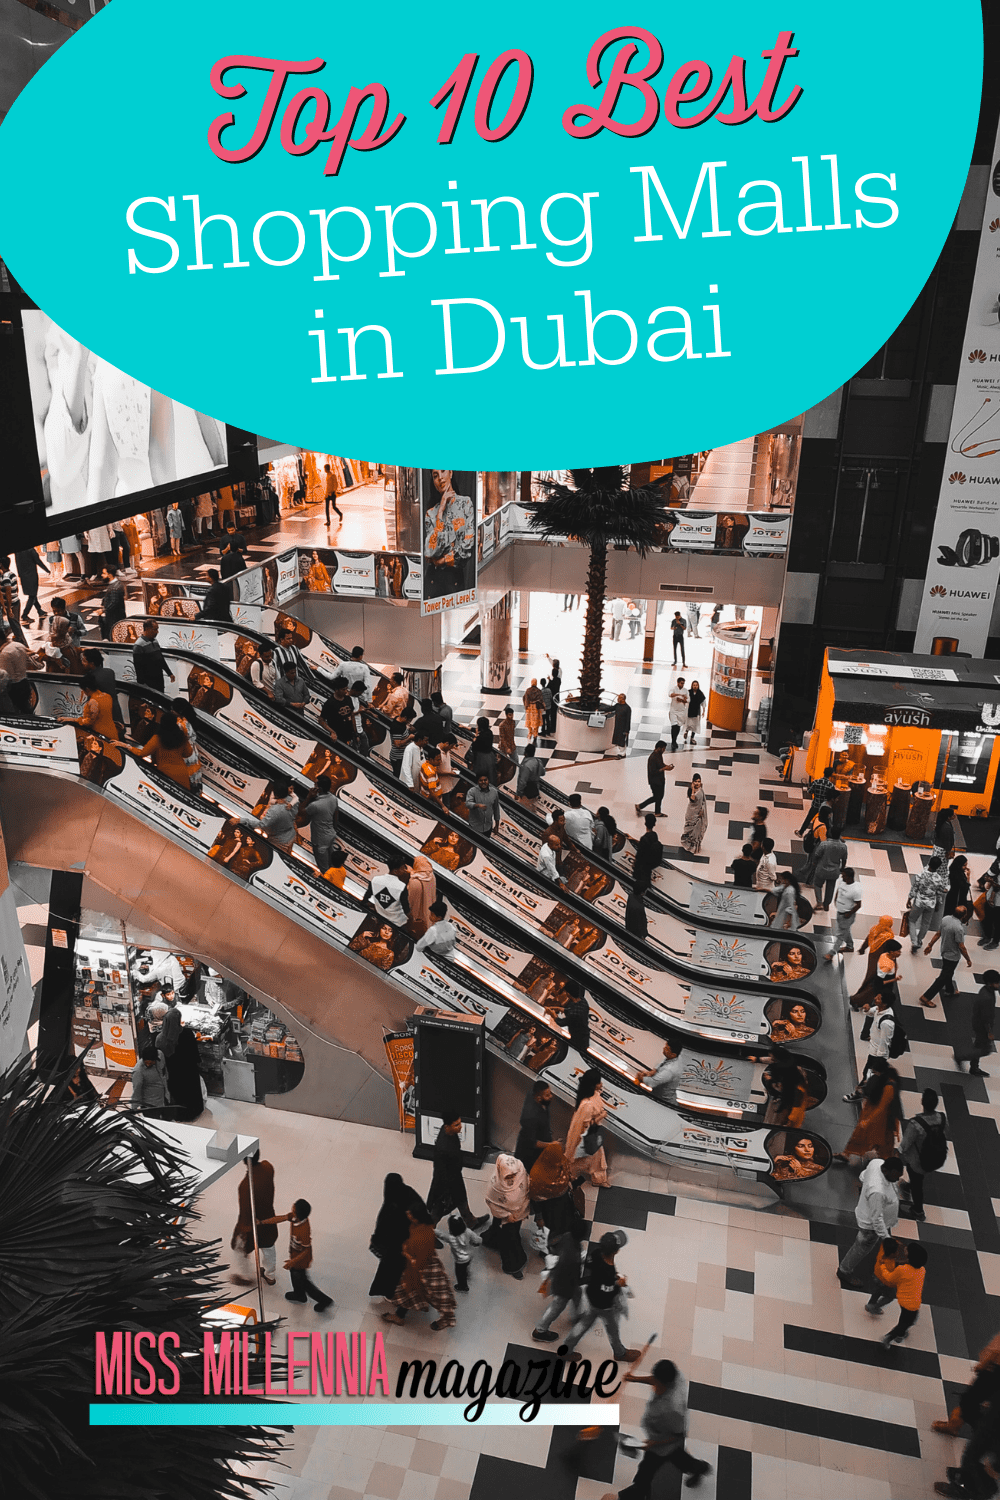 Top 10 Best Shopping Malls in Dubai